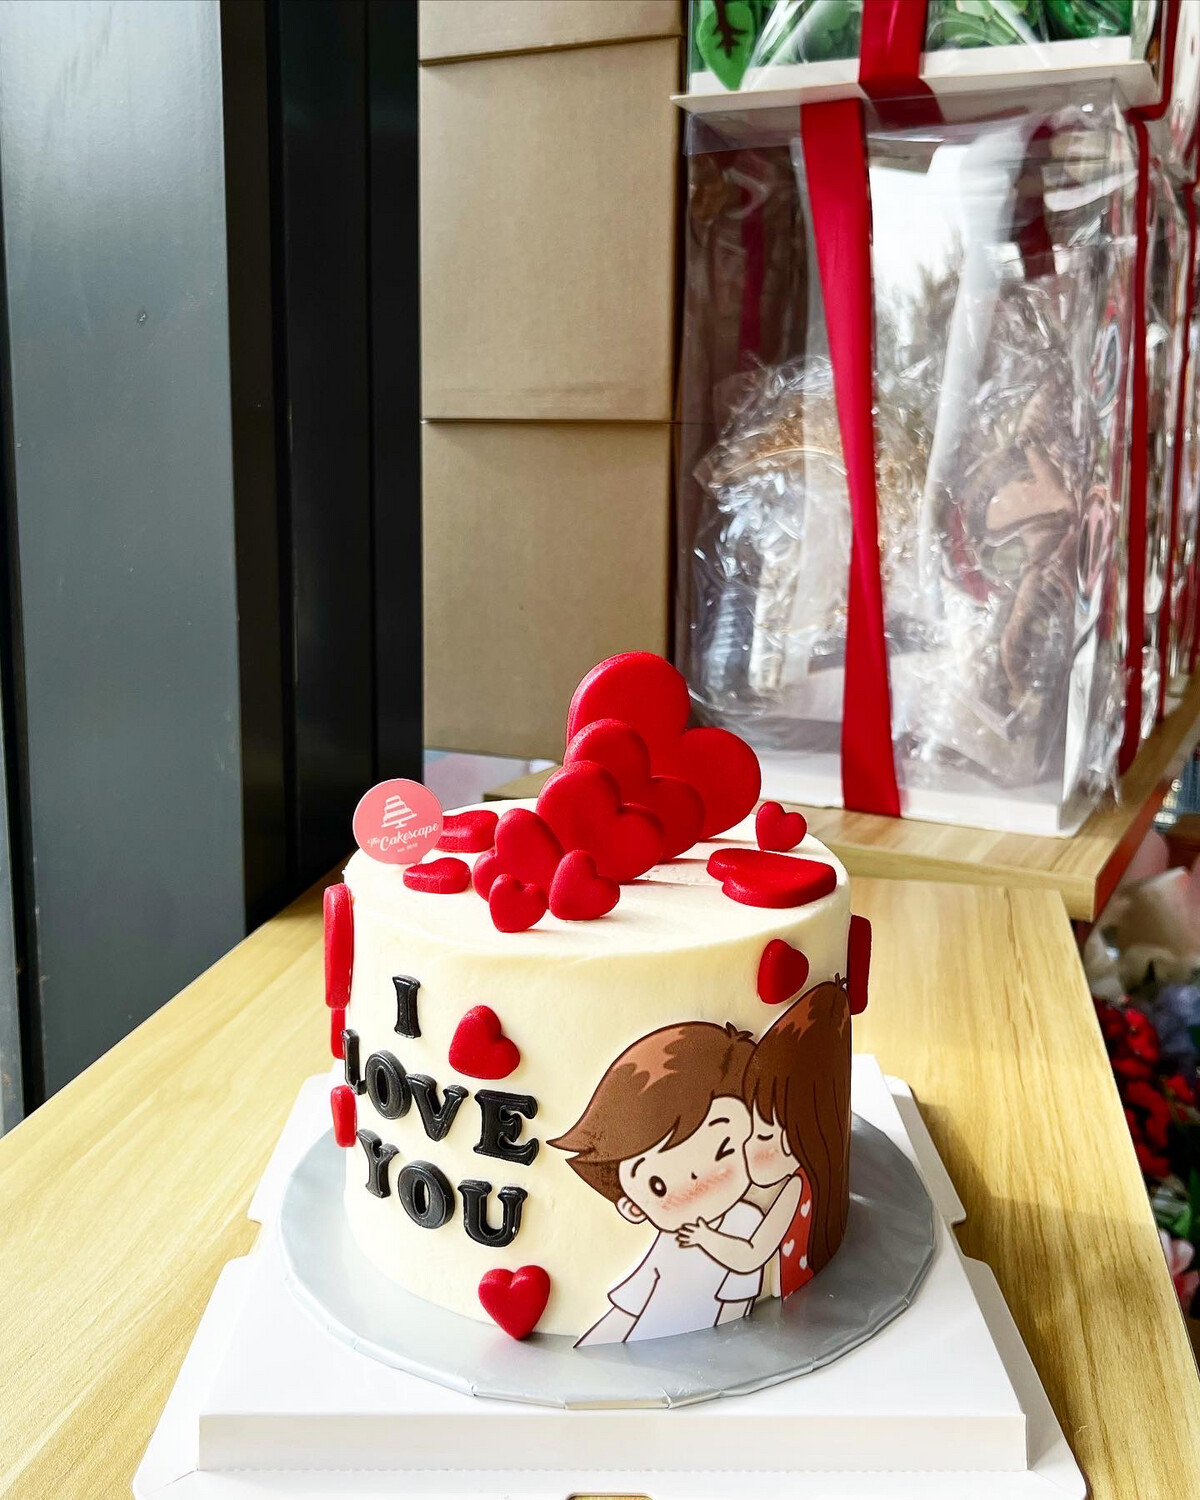 Couple Relationship Love Cake 1